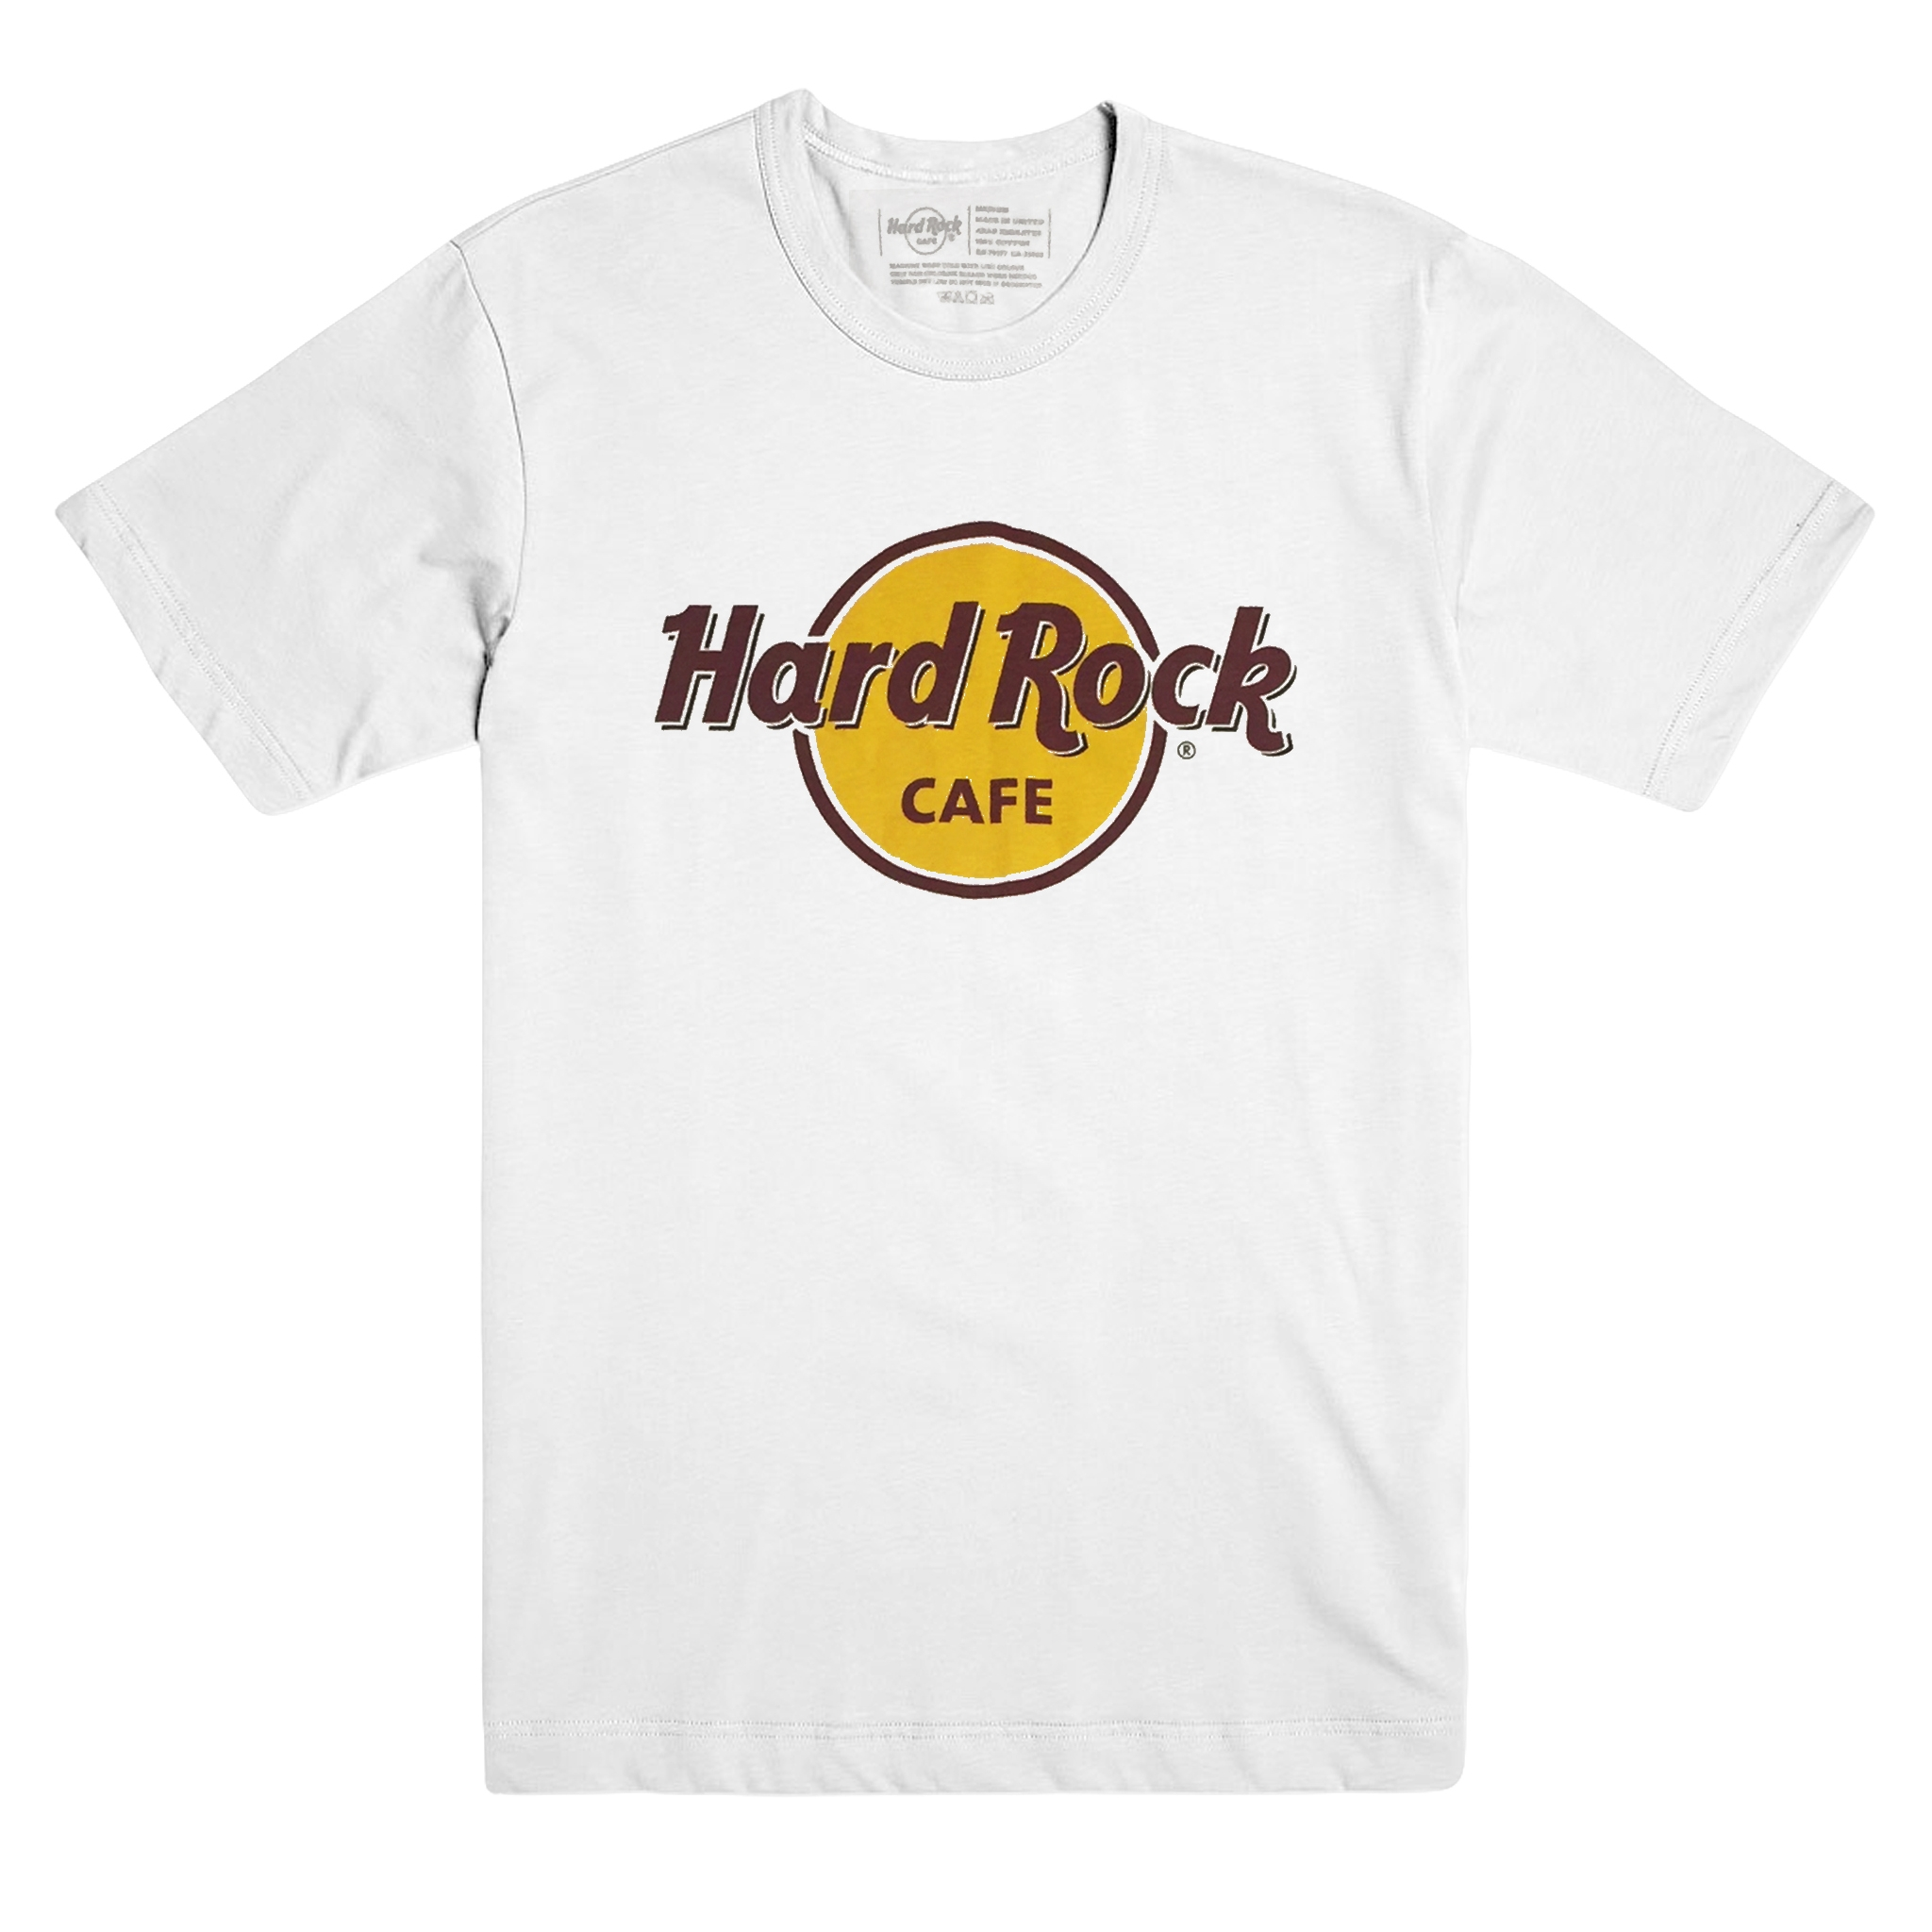 Iconic t shirt design - Hard Rock Cafe T-shirt